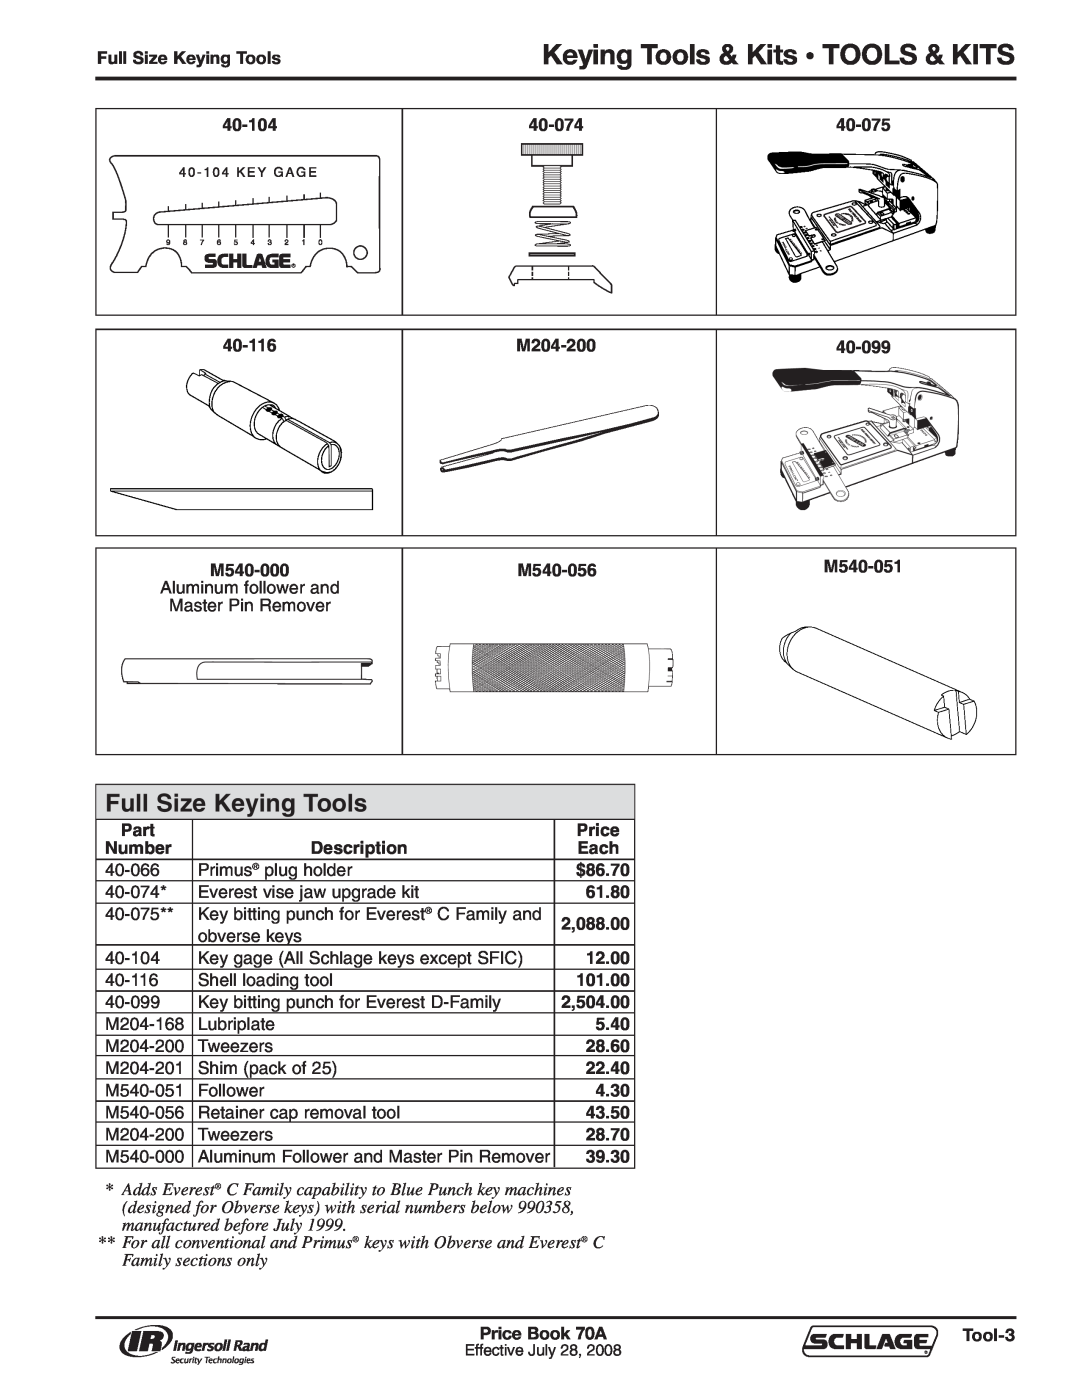 Schlage 70A manual Keying Tools & Kits • TOOLS & KITS, Full Size Keying Tools 